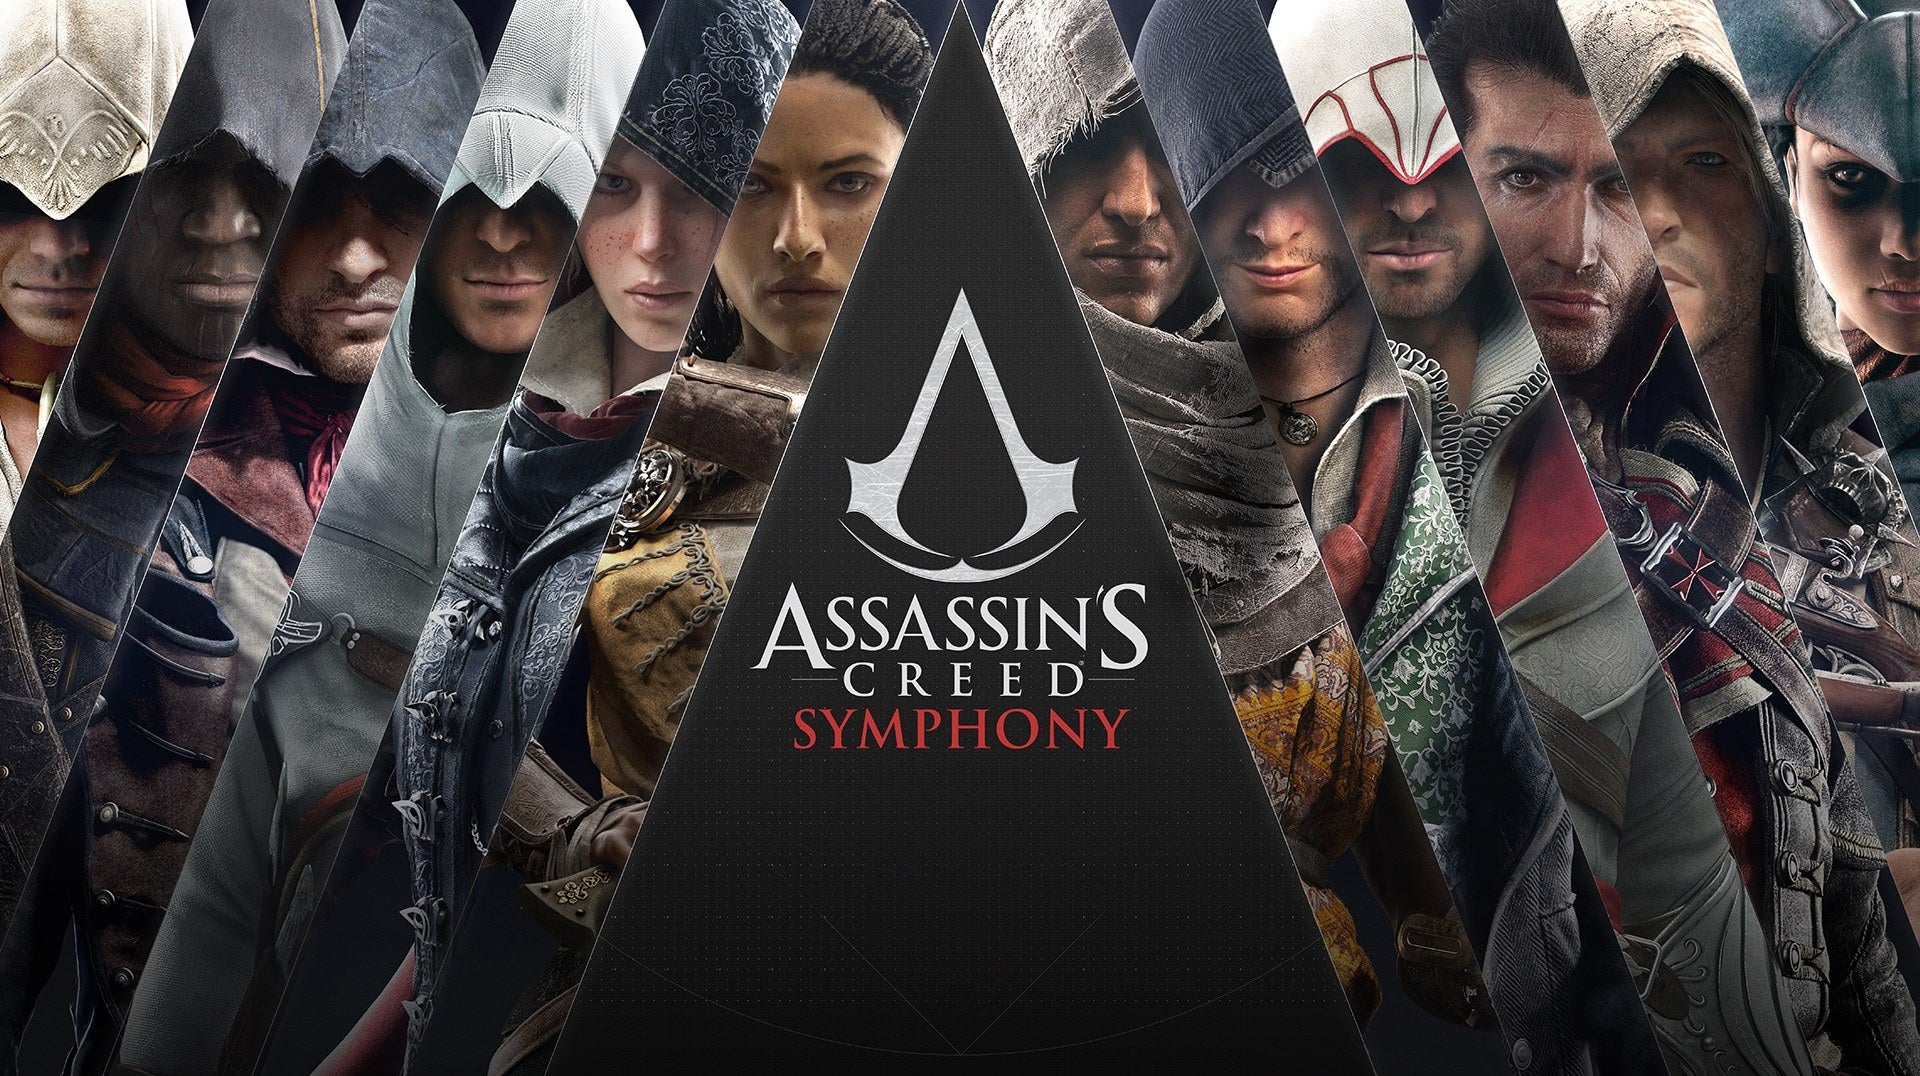 Immagine di Assassin's Creed Symphony: l'acclamata serie Ubisoft diventa protagonista di un tour mondiale sinfonico